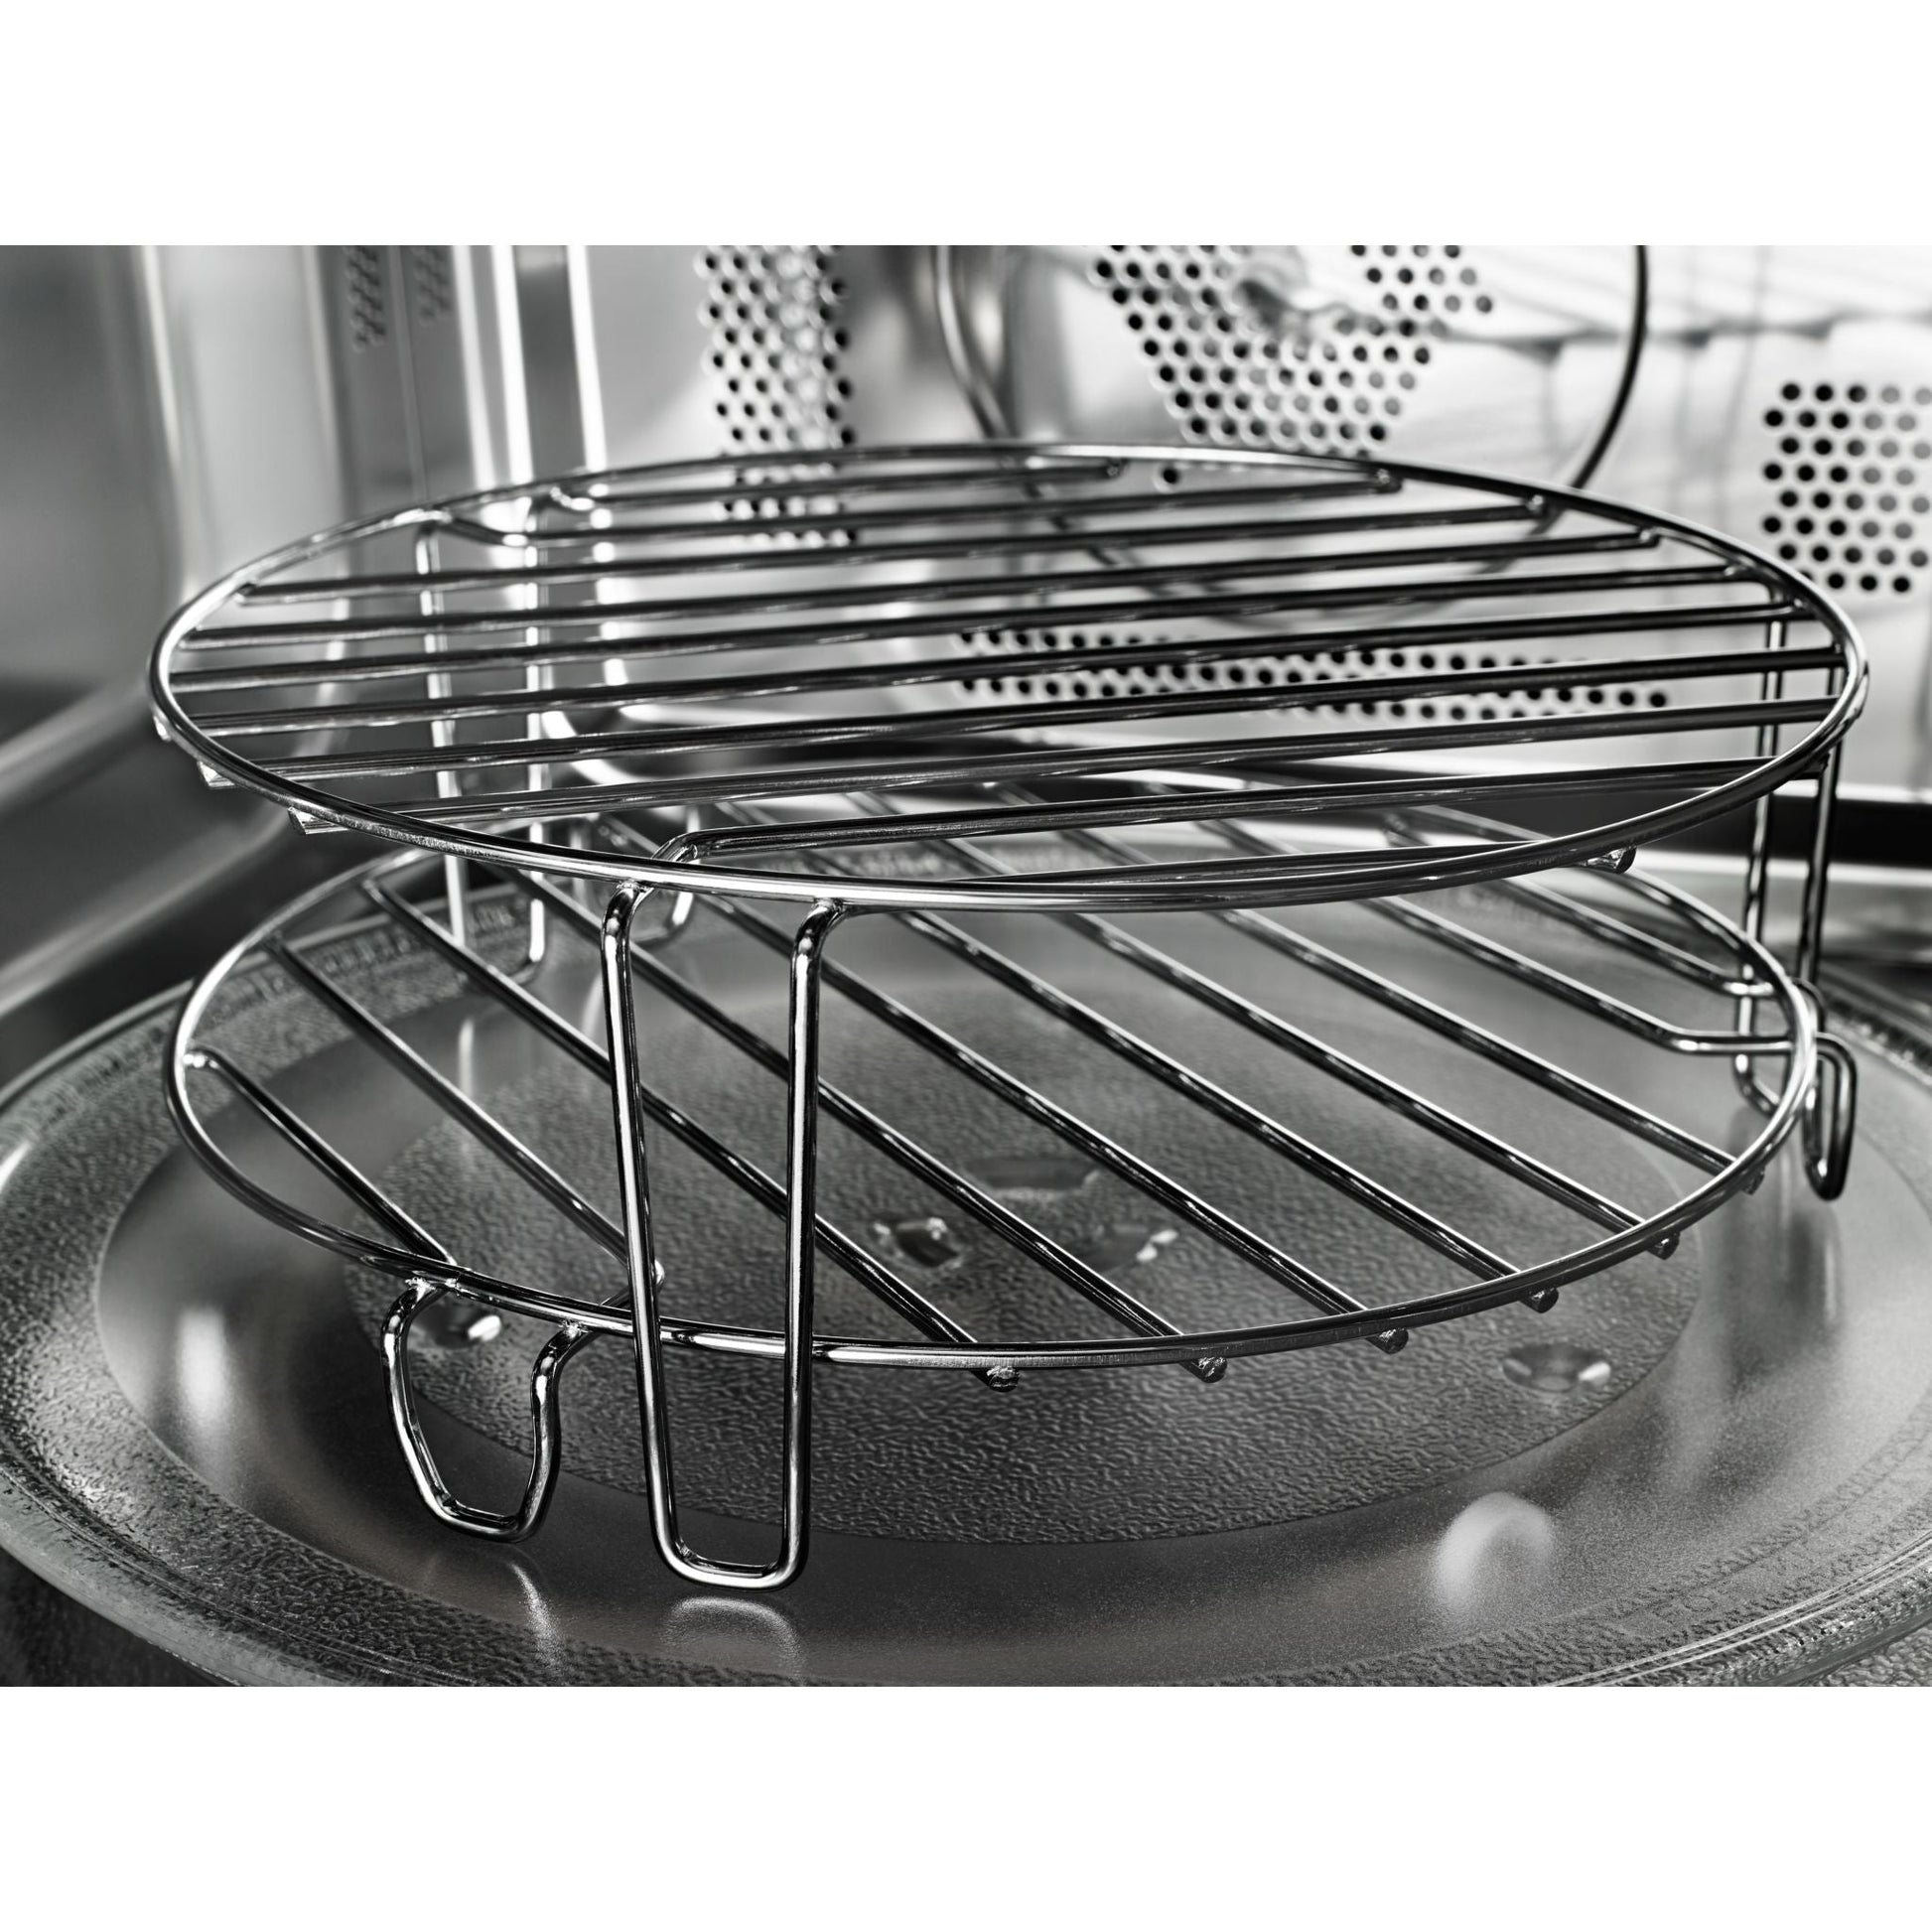 KitchenAid Microwave (KMCC5015GSS) - Stainless Steel